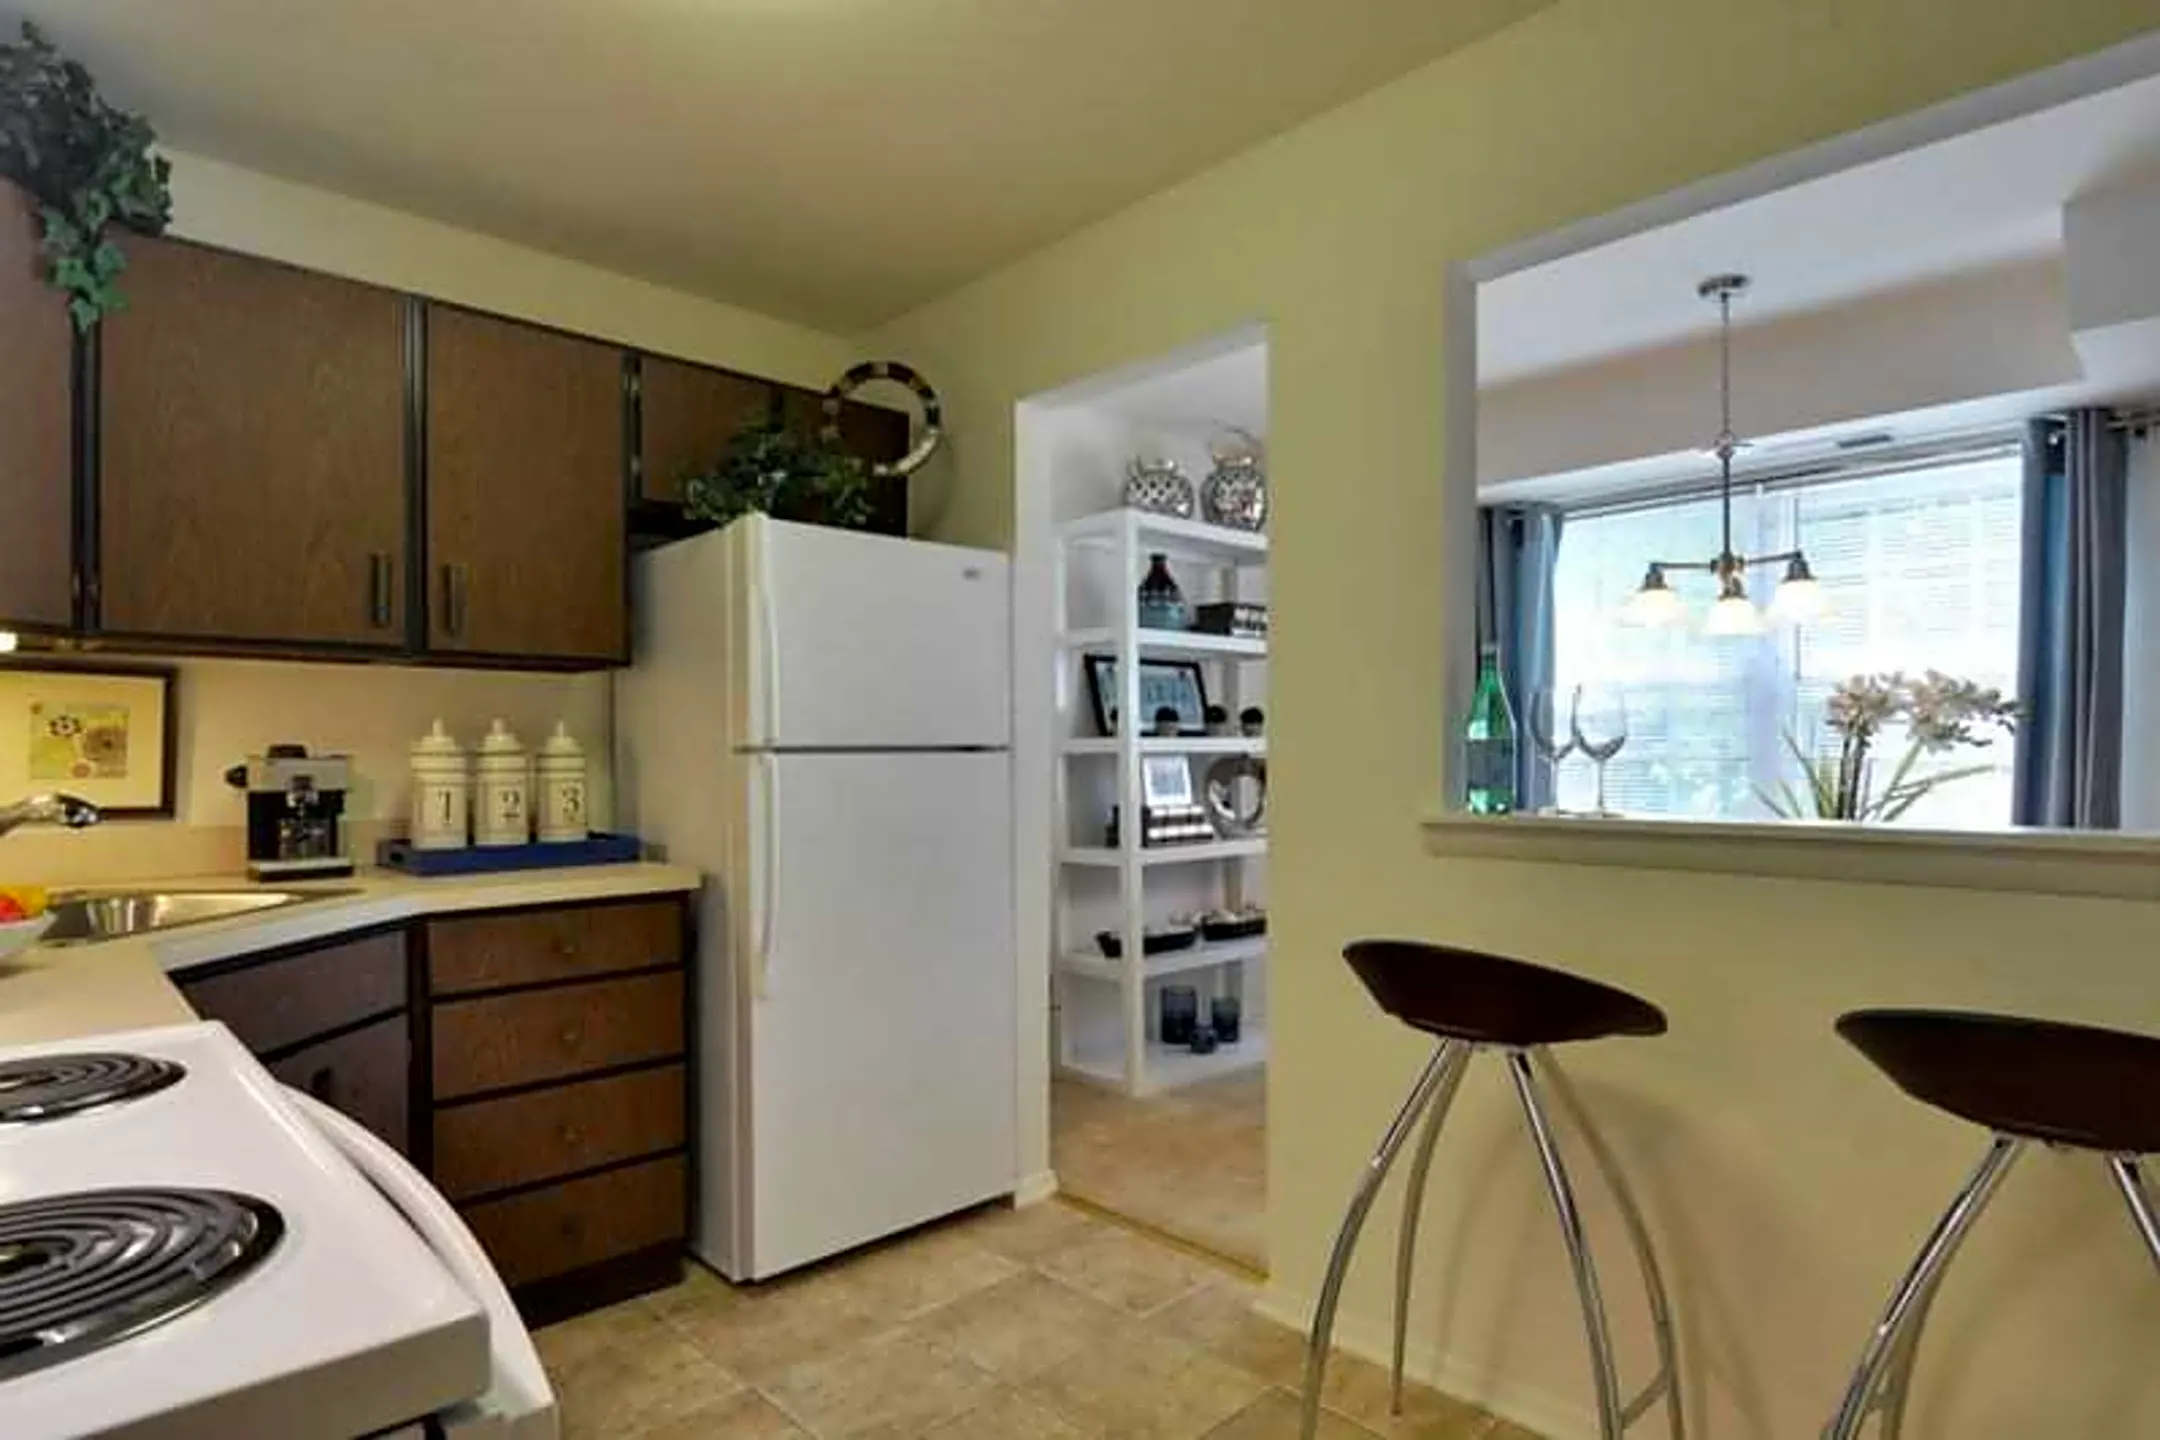 Kitchen - Hickory Hills Condominiums - Bel Air, MD